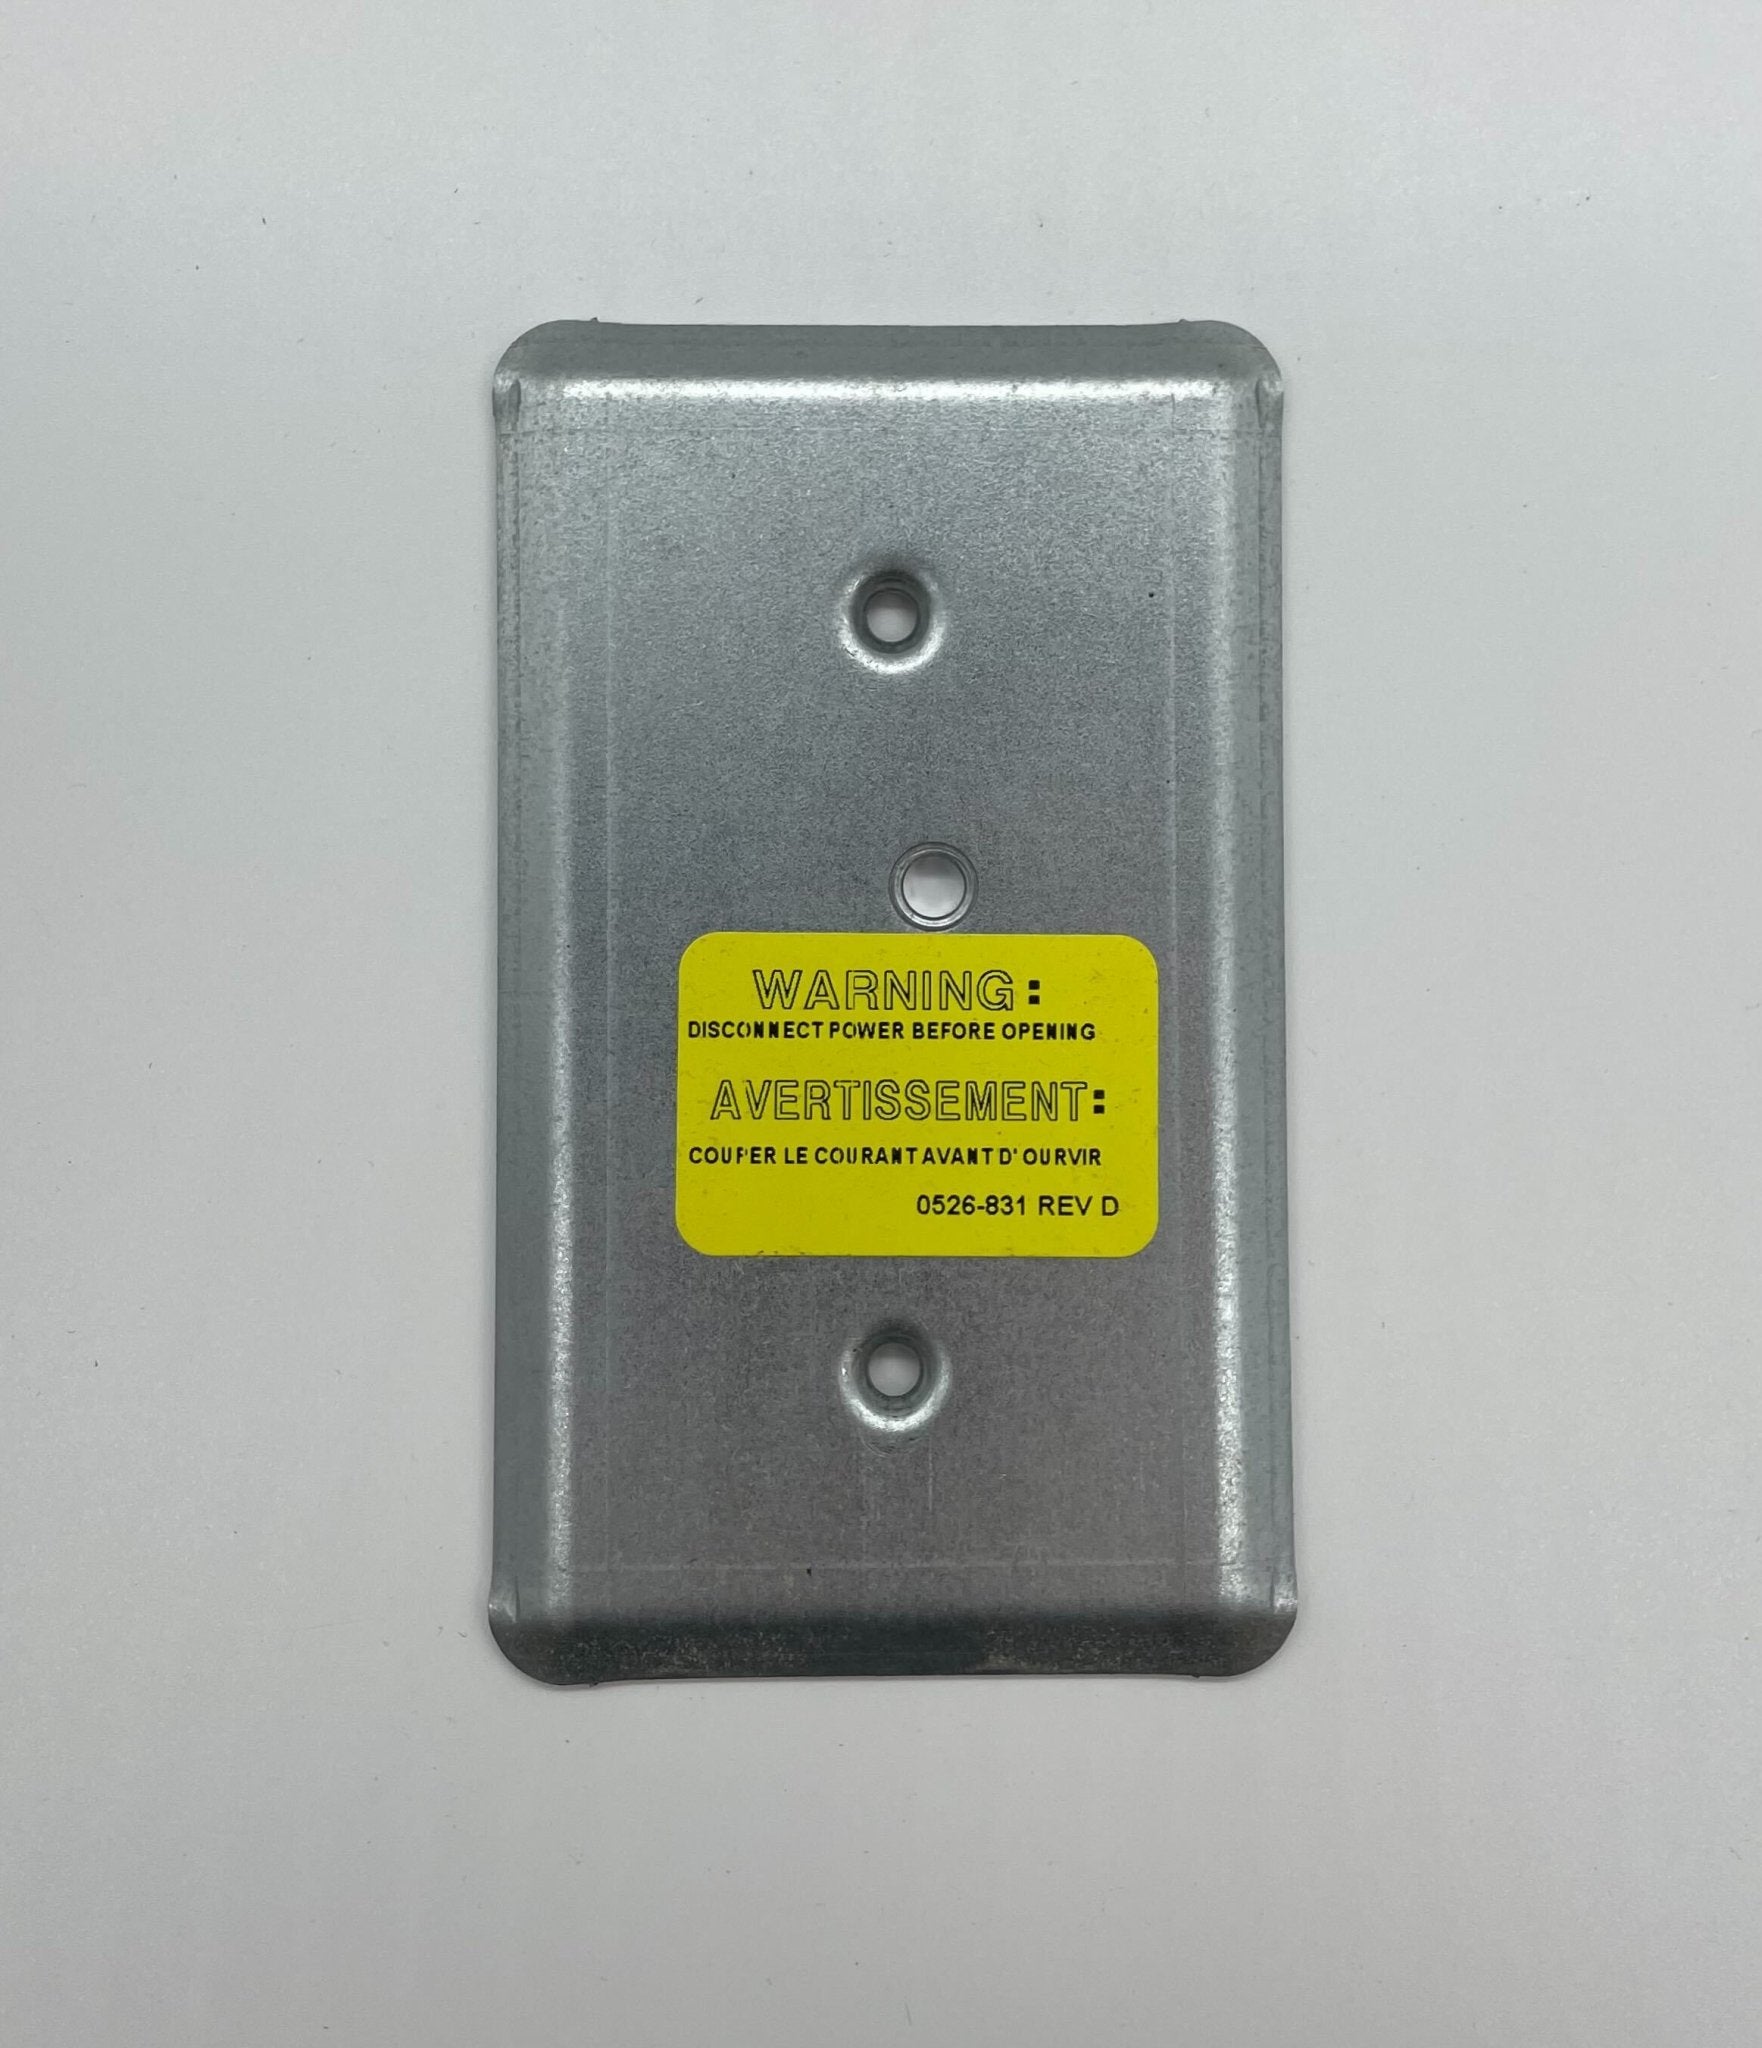 Simplex 4090-9806 - The Fire Alarm Supplier